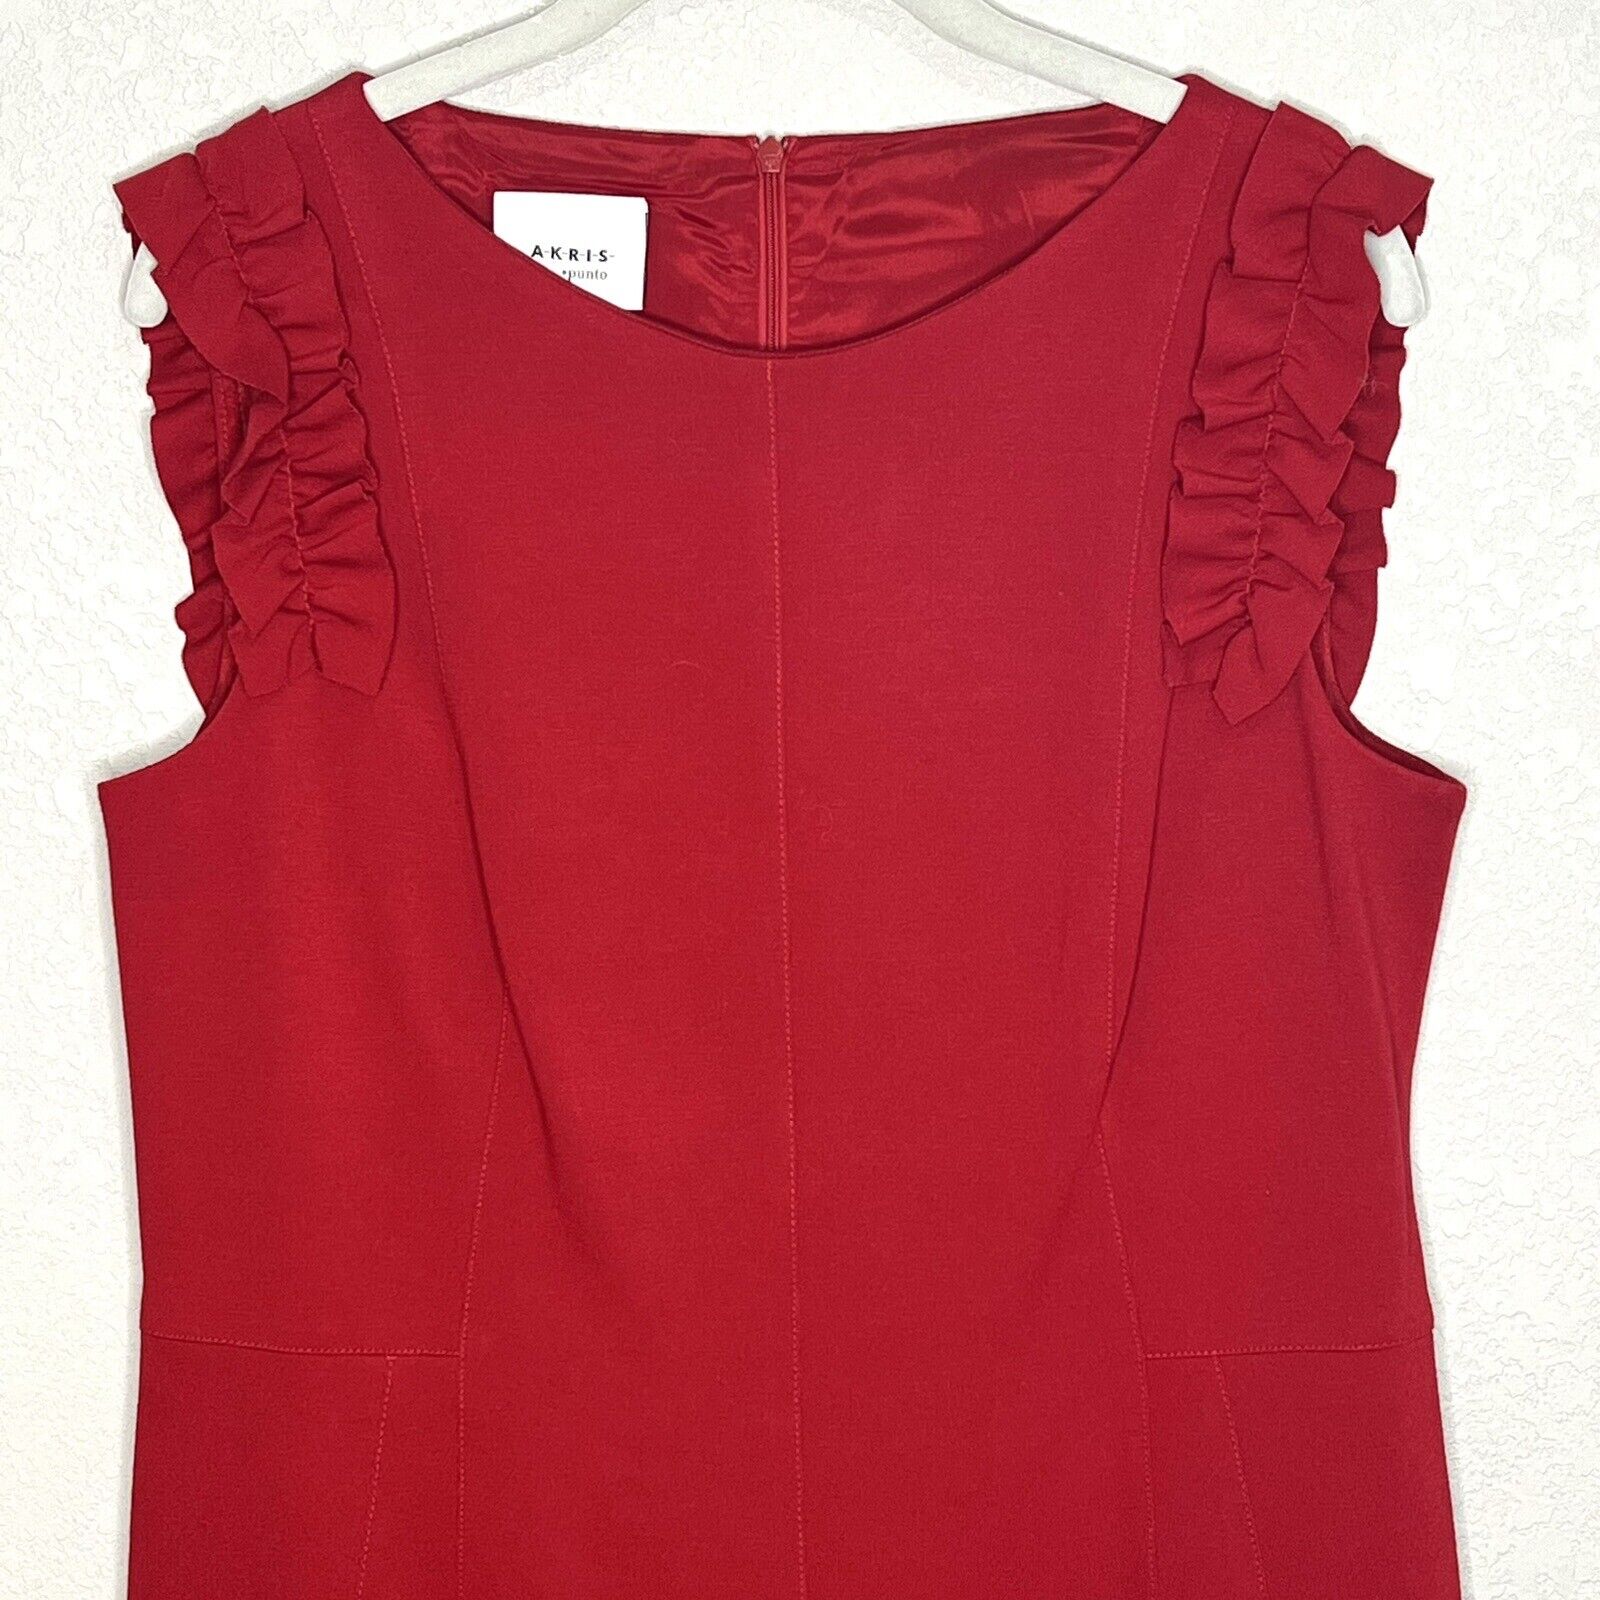 Akris Punto Red Ruffle Sleeve Sheath Dress Size 10